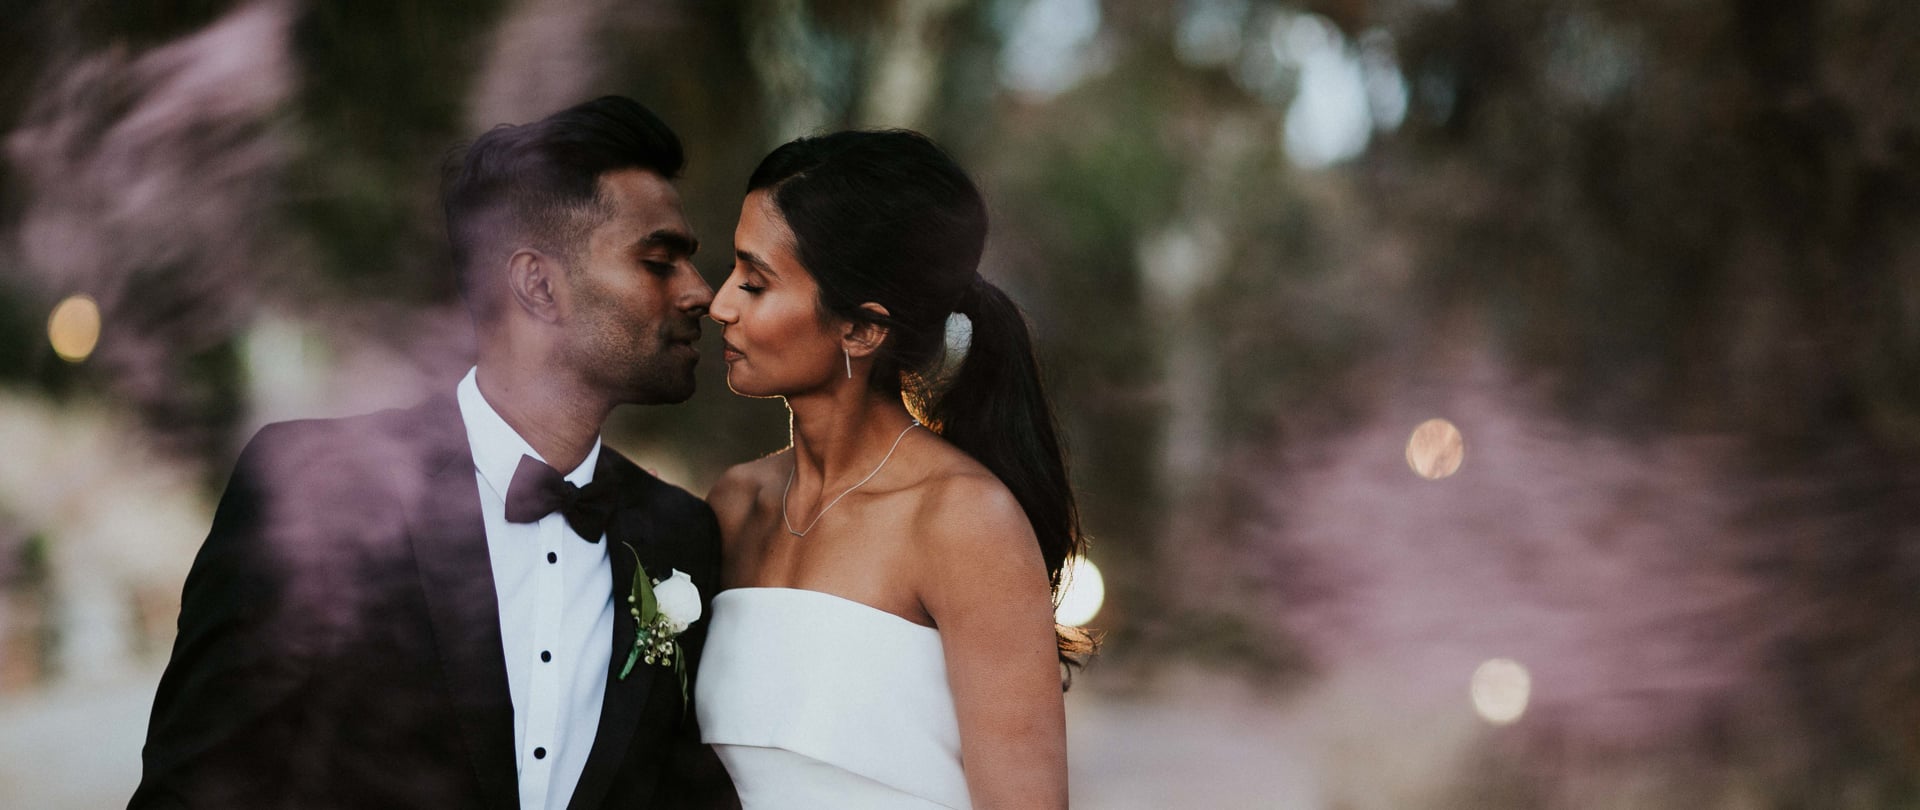 Charms & Sudesh Wedding Video Filmed at Tasmania, Australia